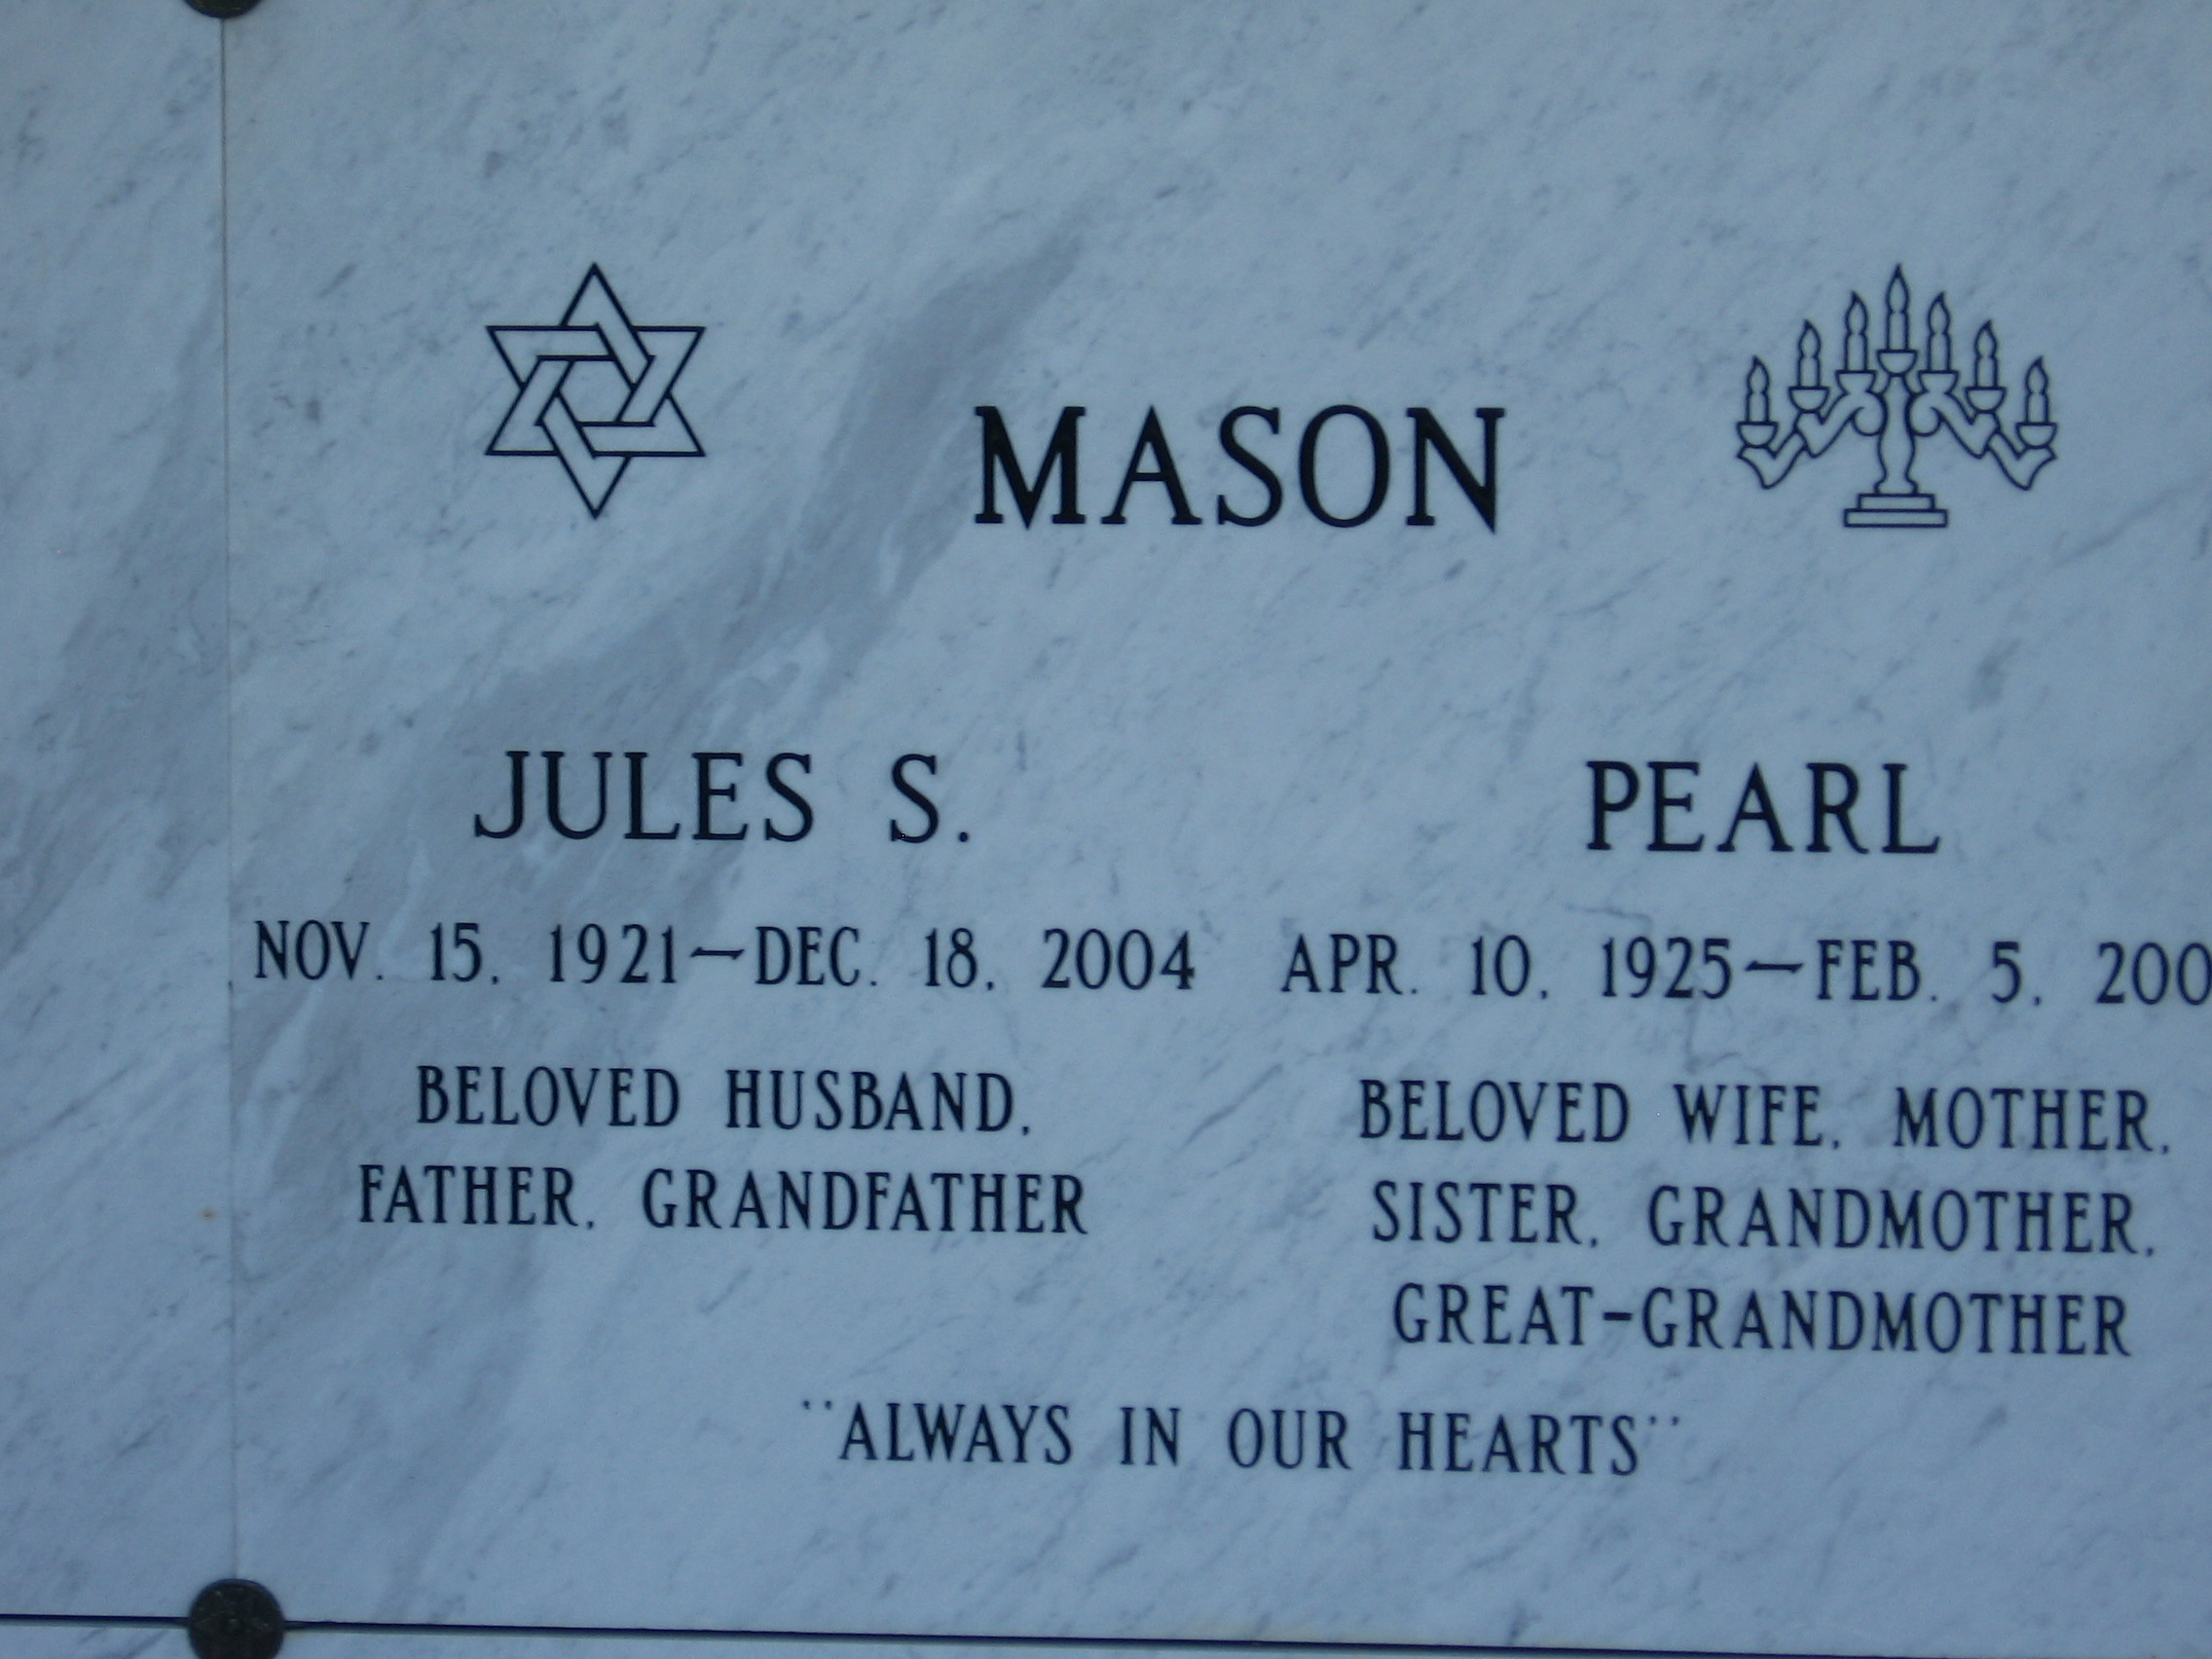 Jules S Mason